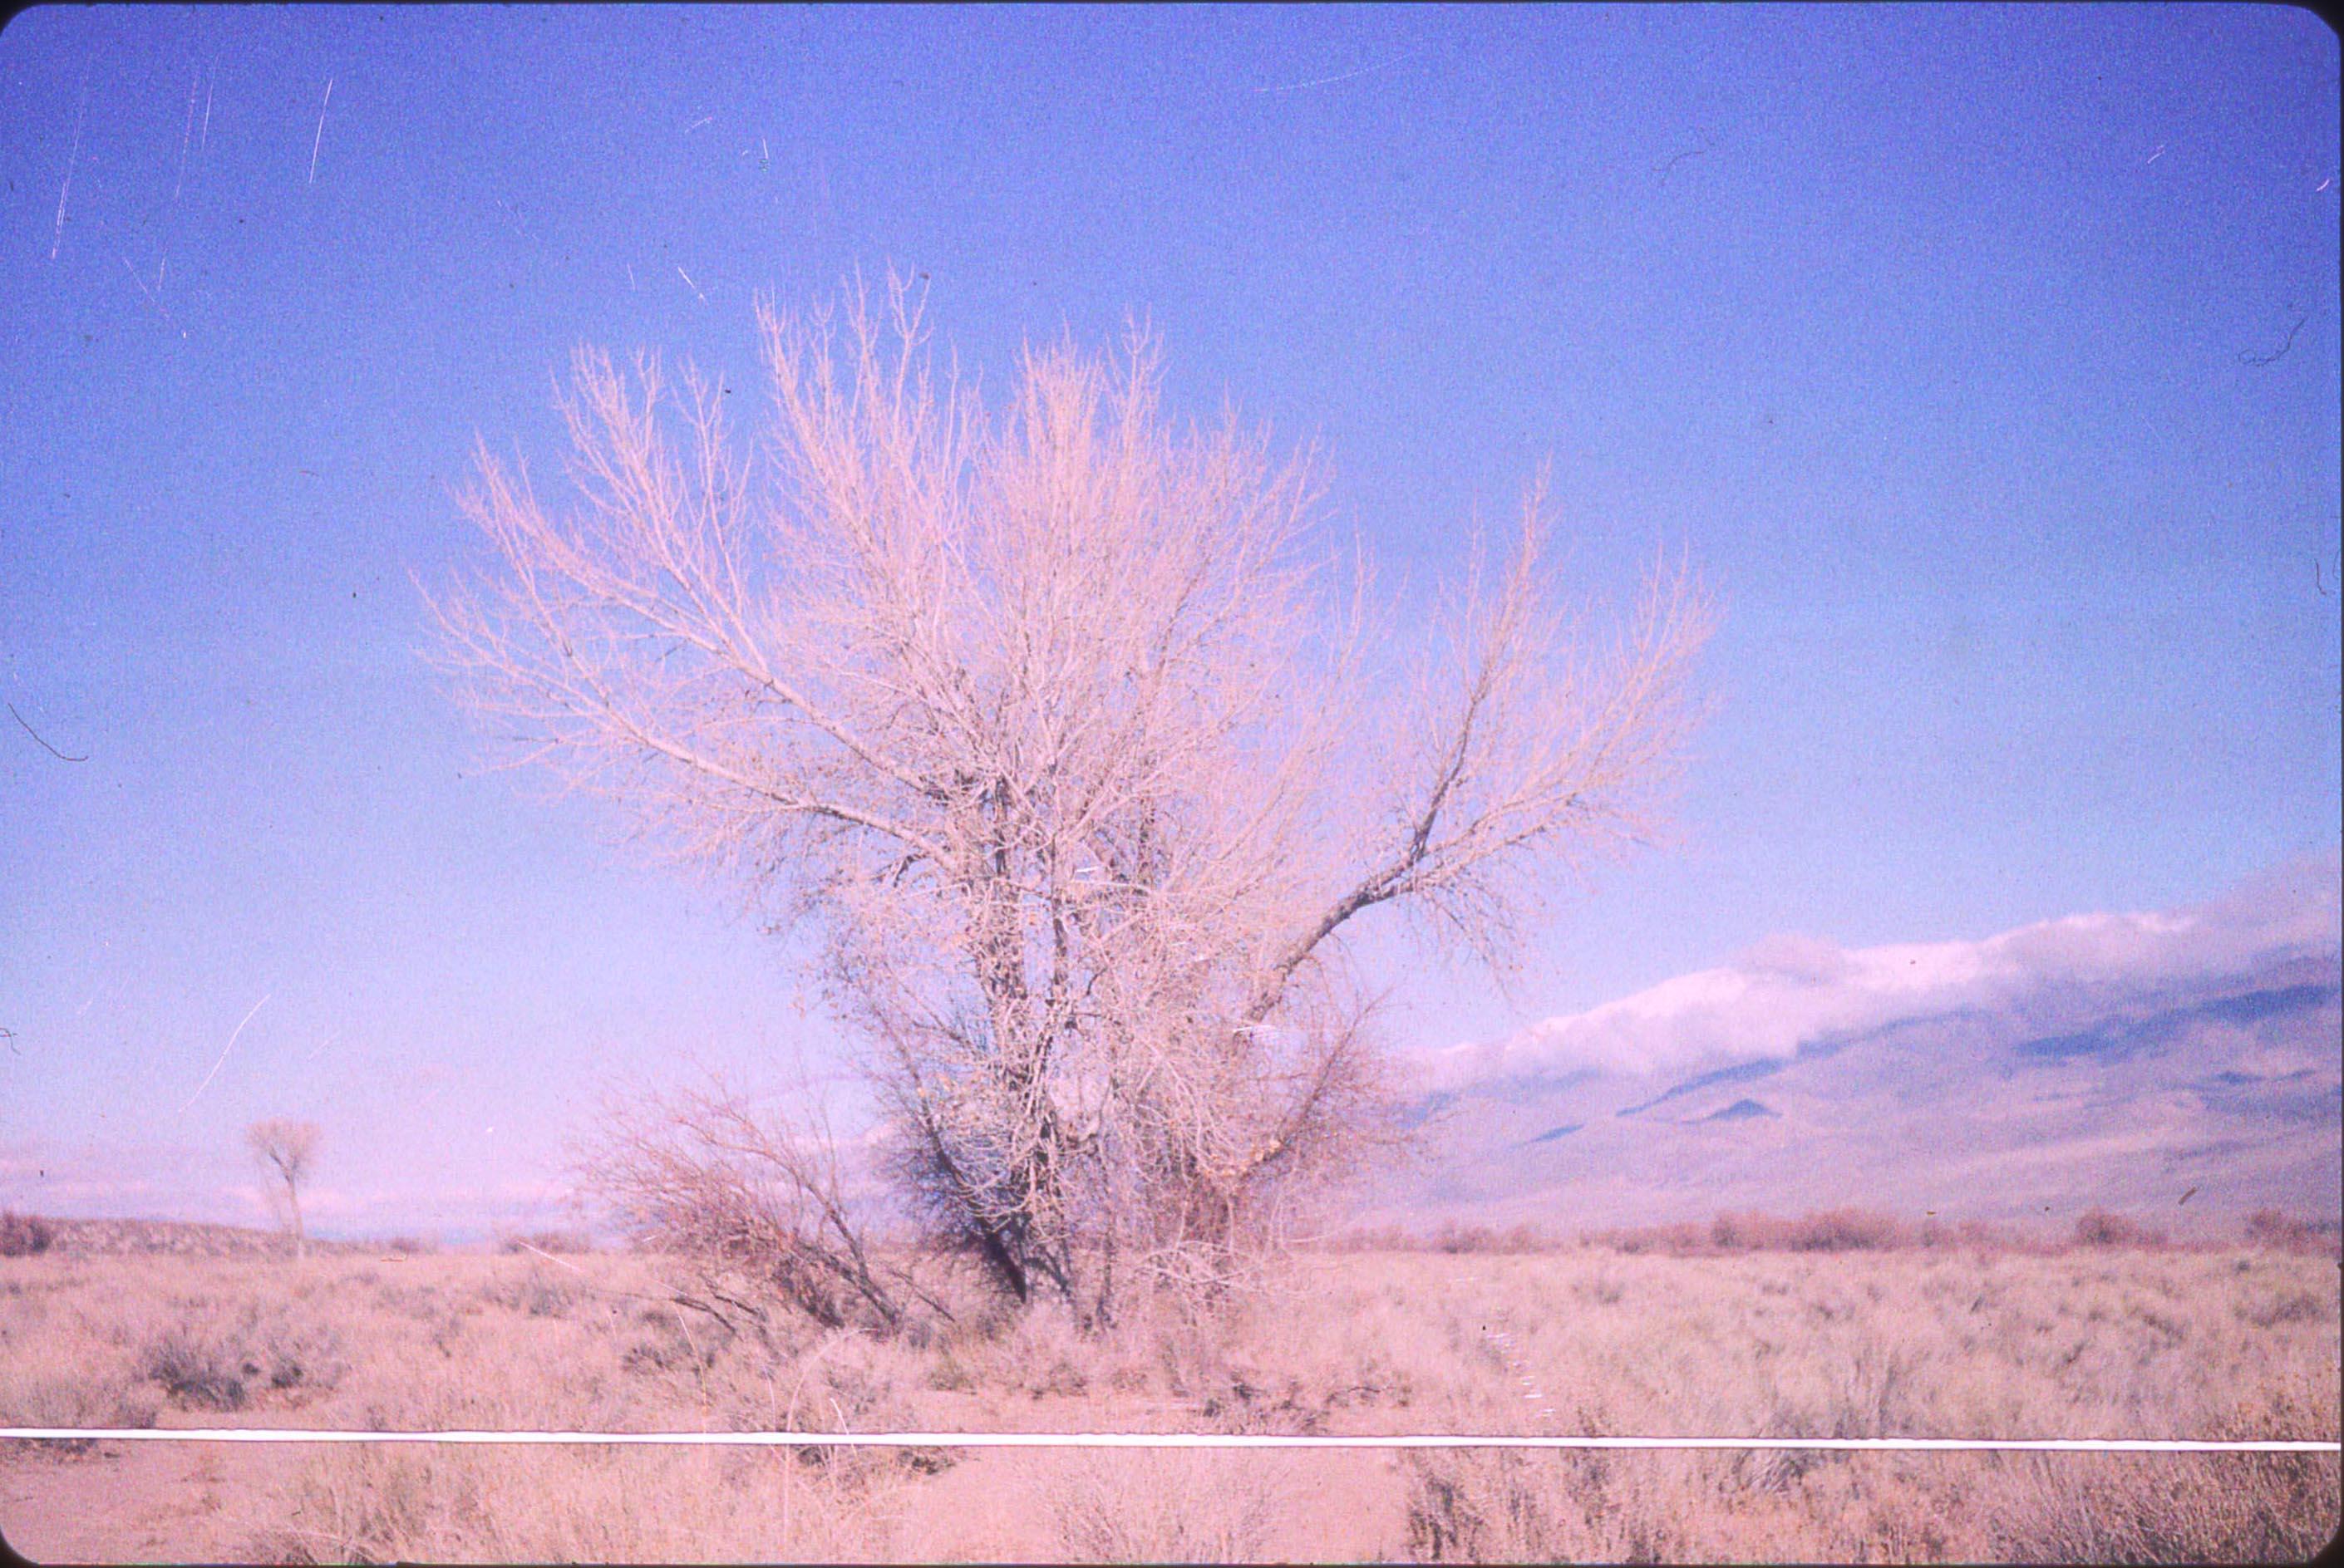 Landscape Photograph Stefanie Schneider - Mon propre journal de voyage privé - Bishop, CA - Automne